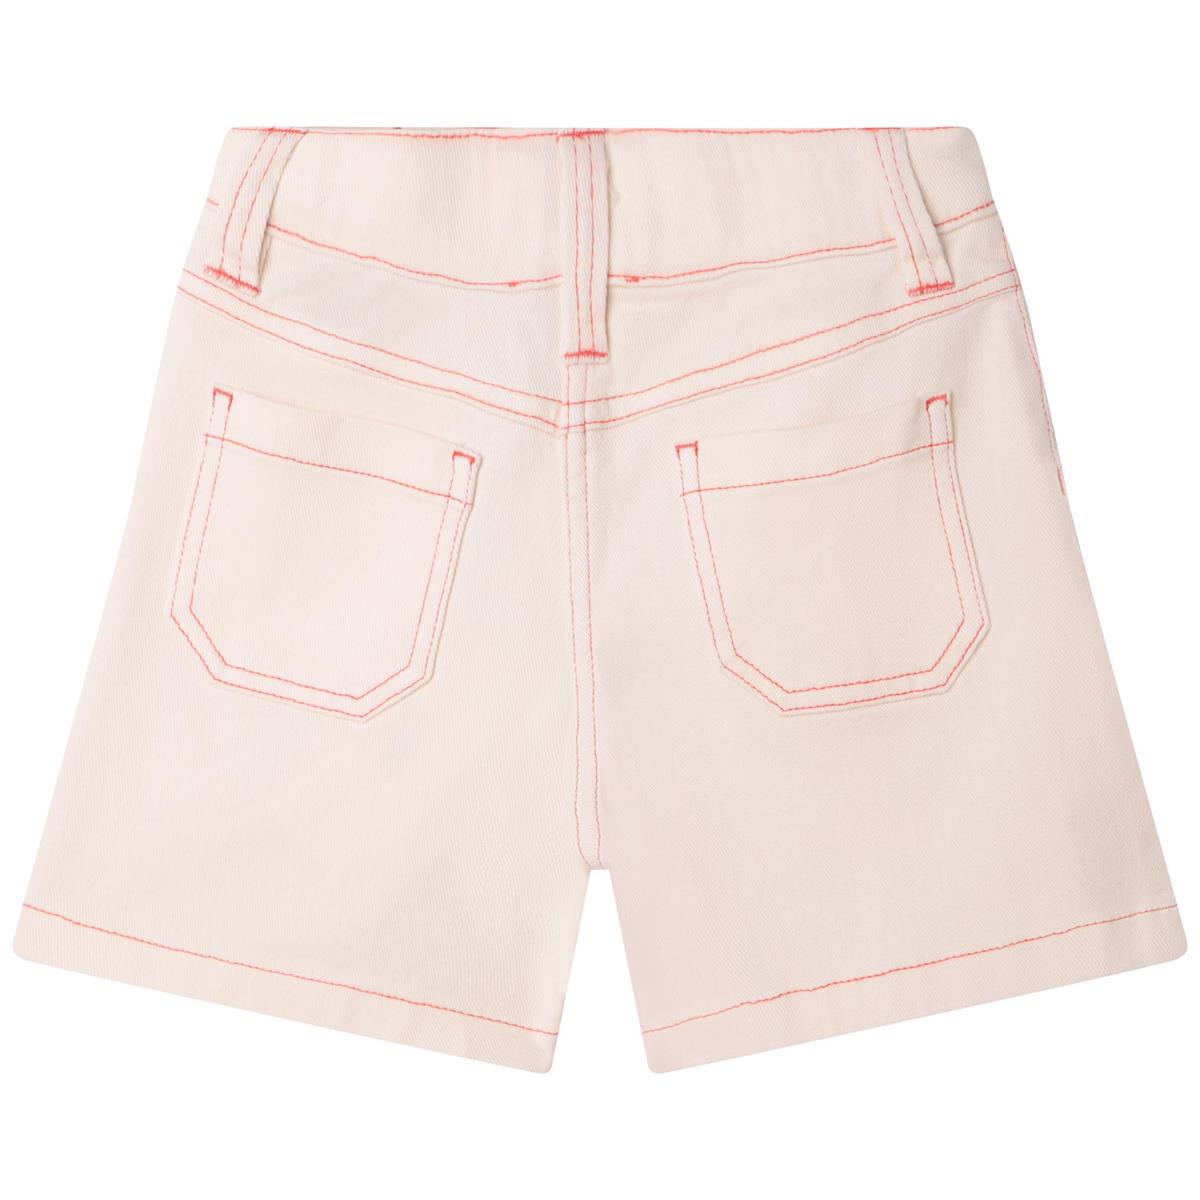 Girls Light Pink Shorts